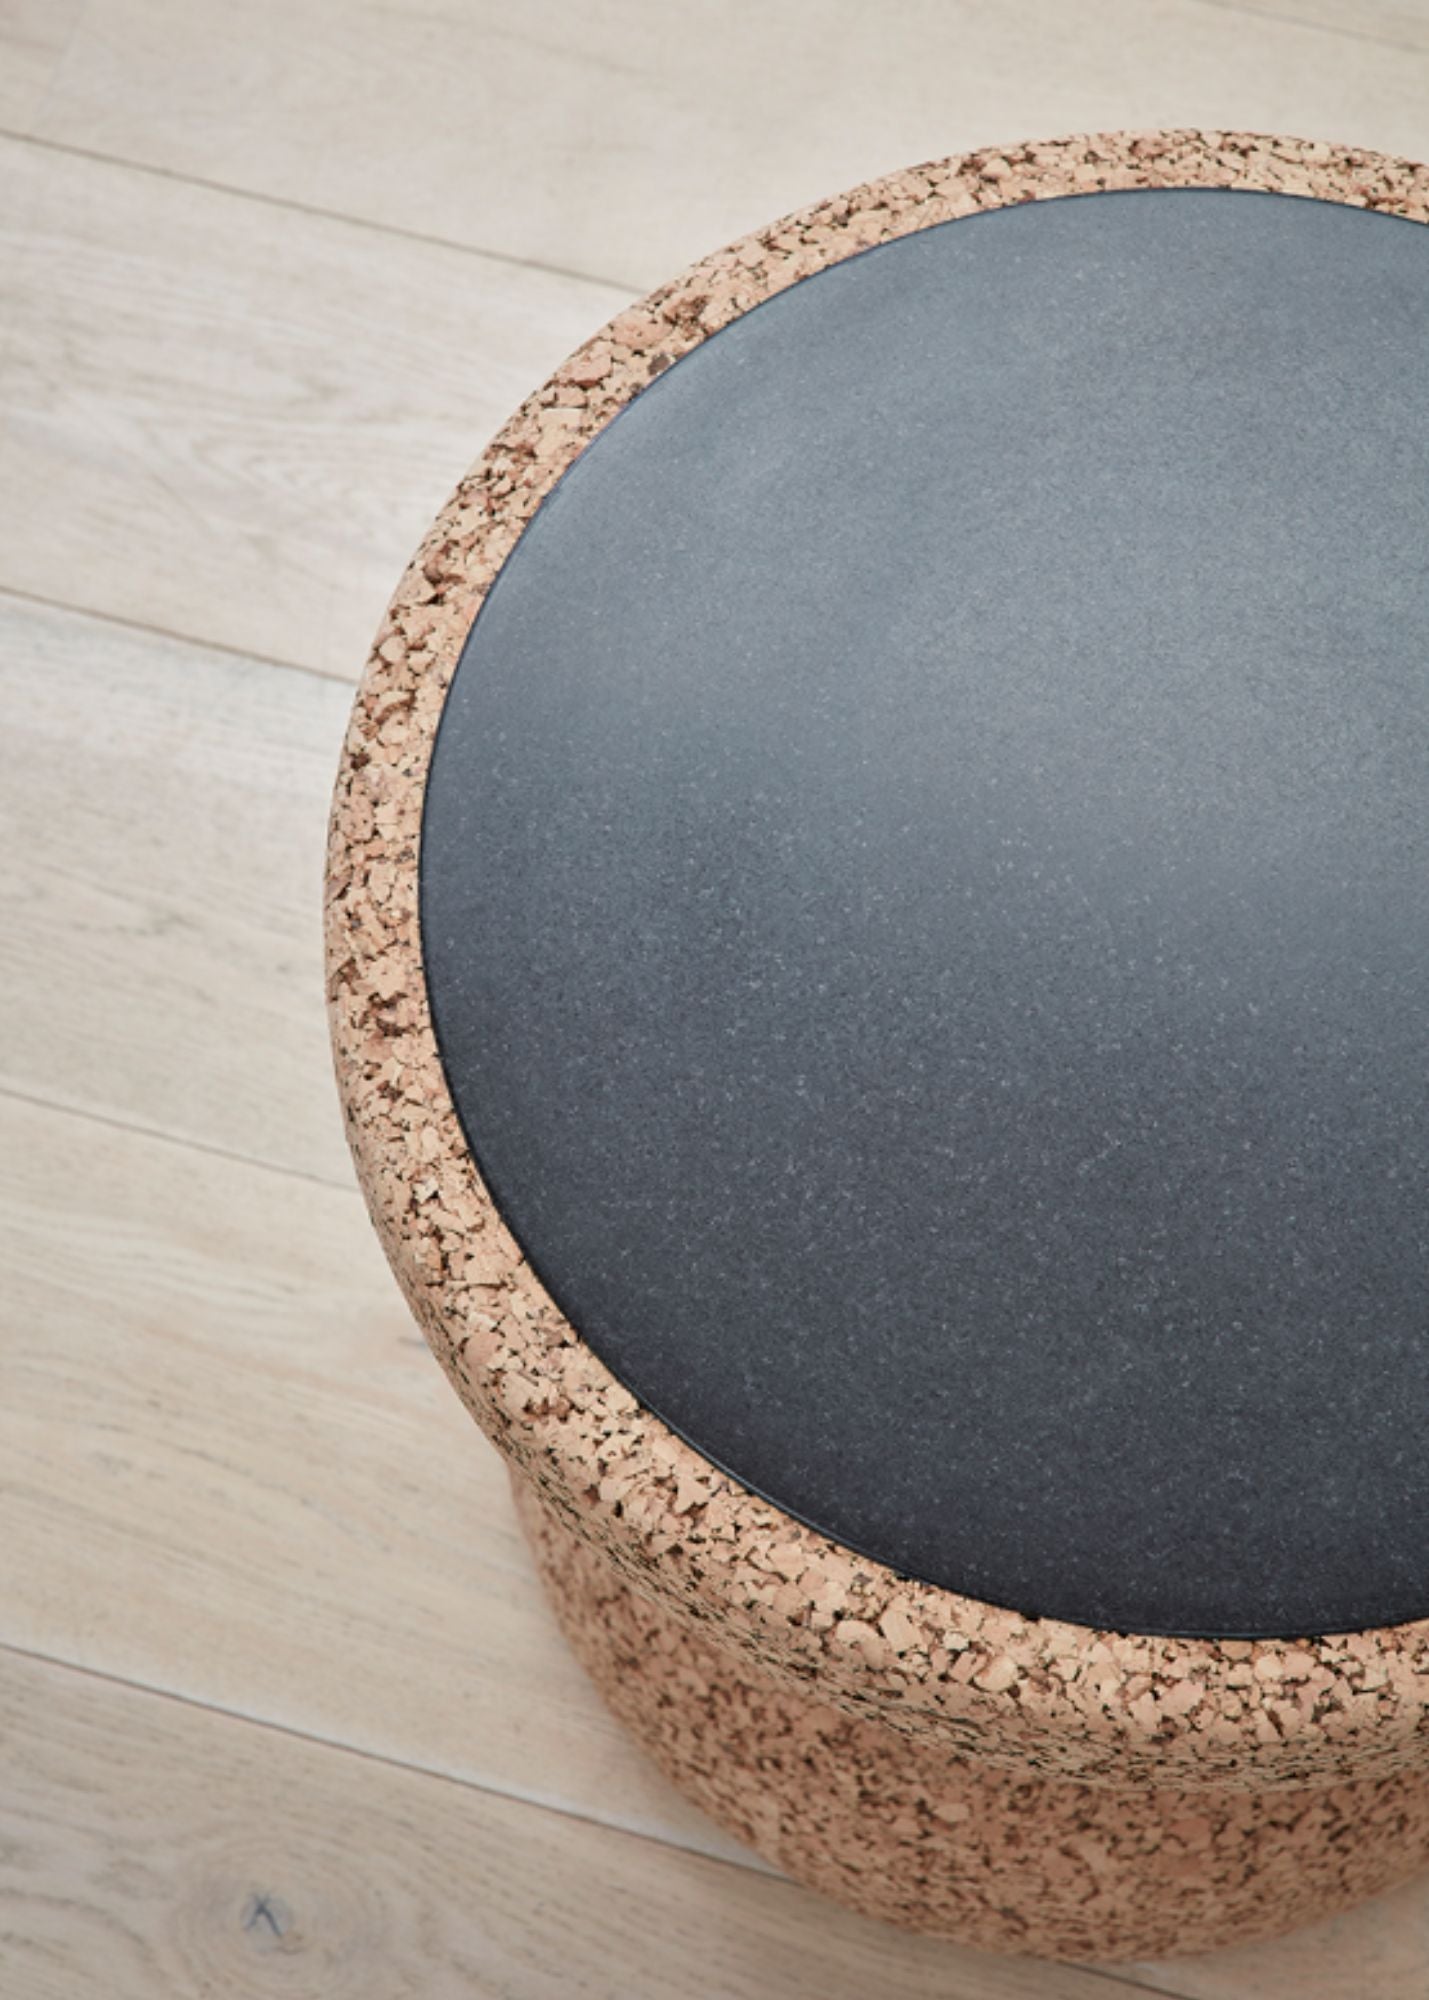 Modern Boho Cork End Table: Wiid African Cork & Granite Side Table